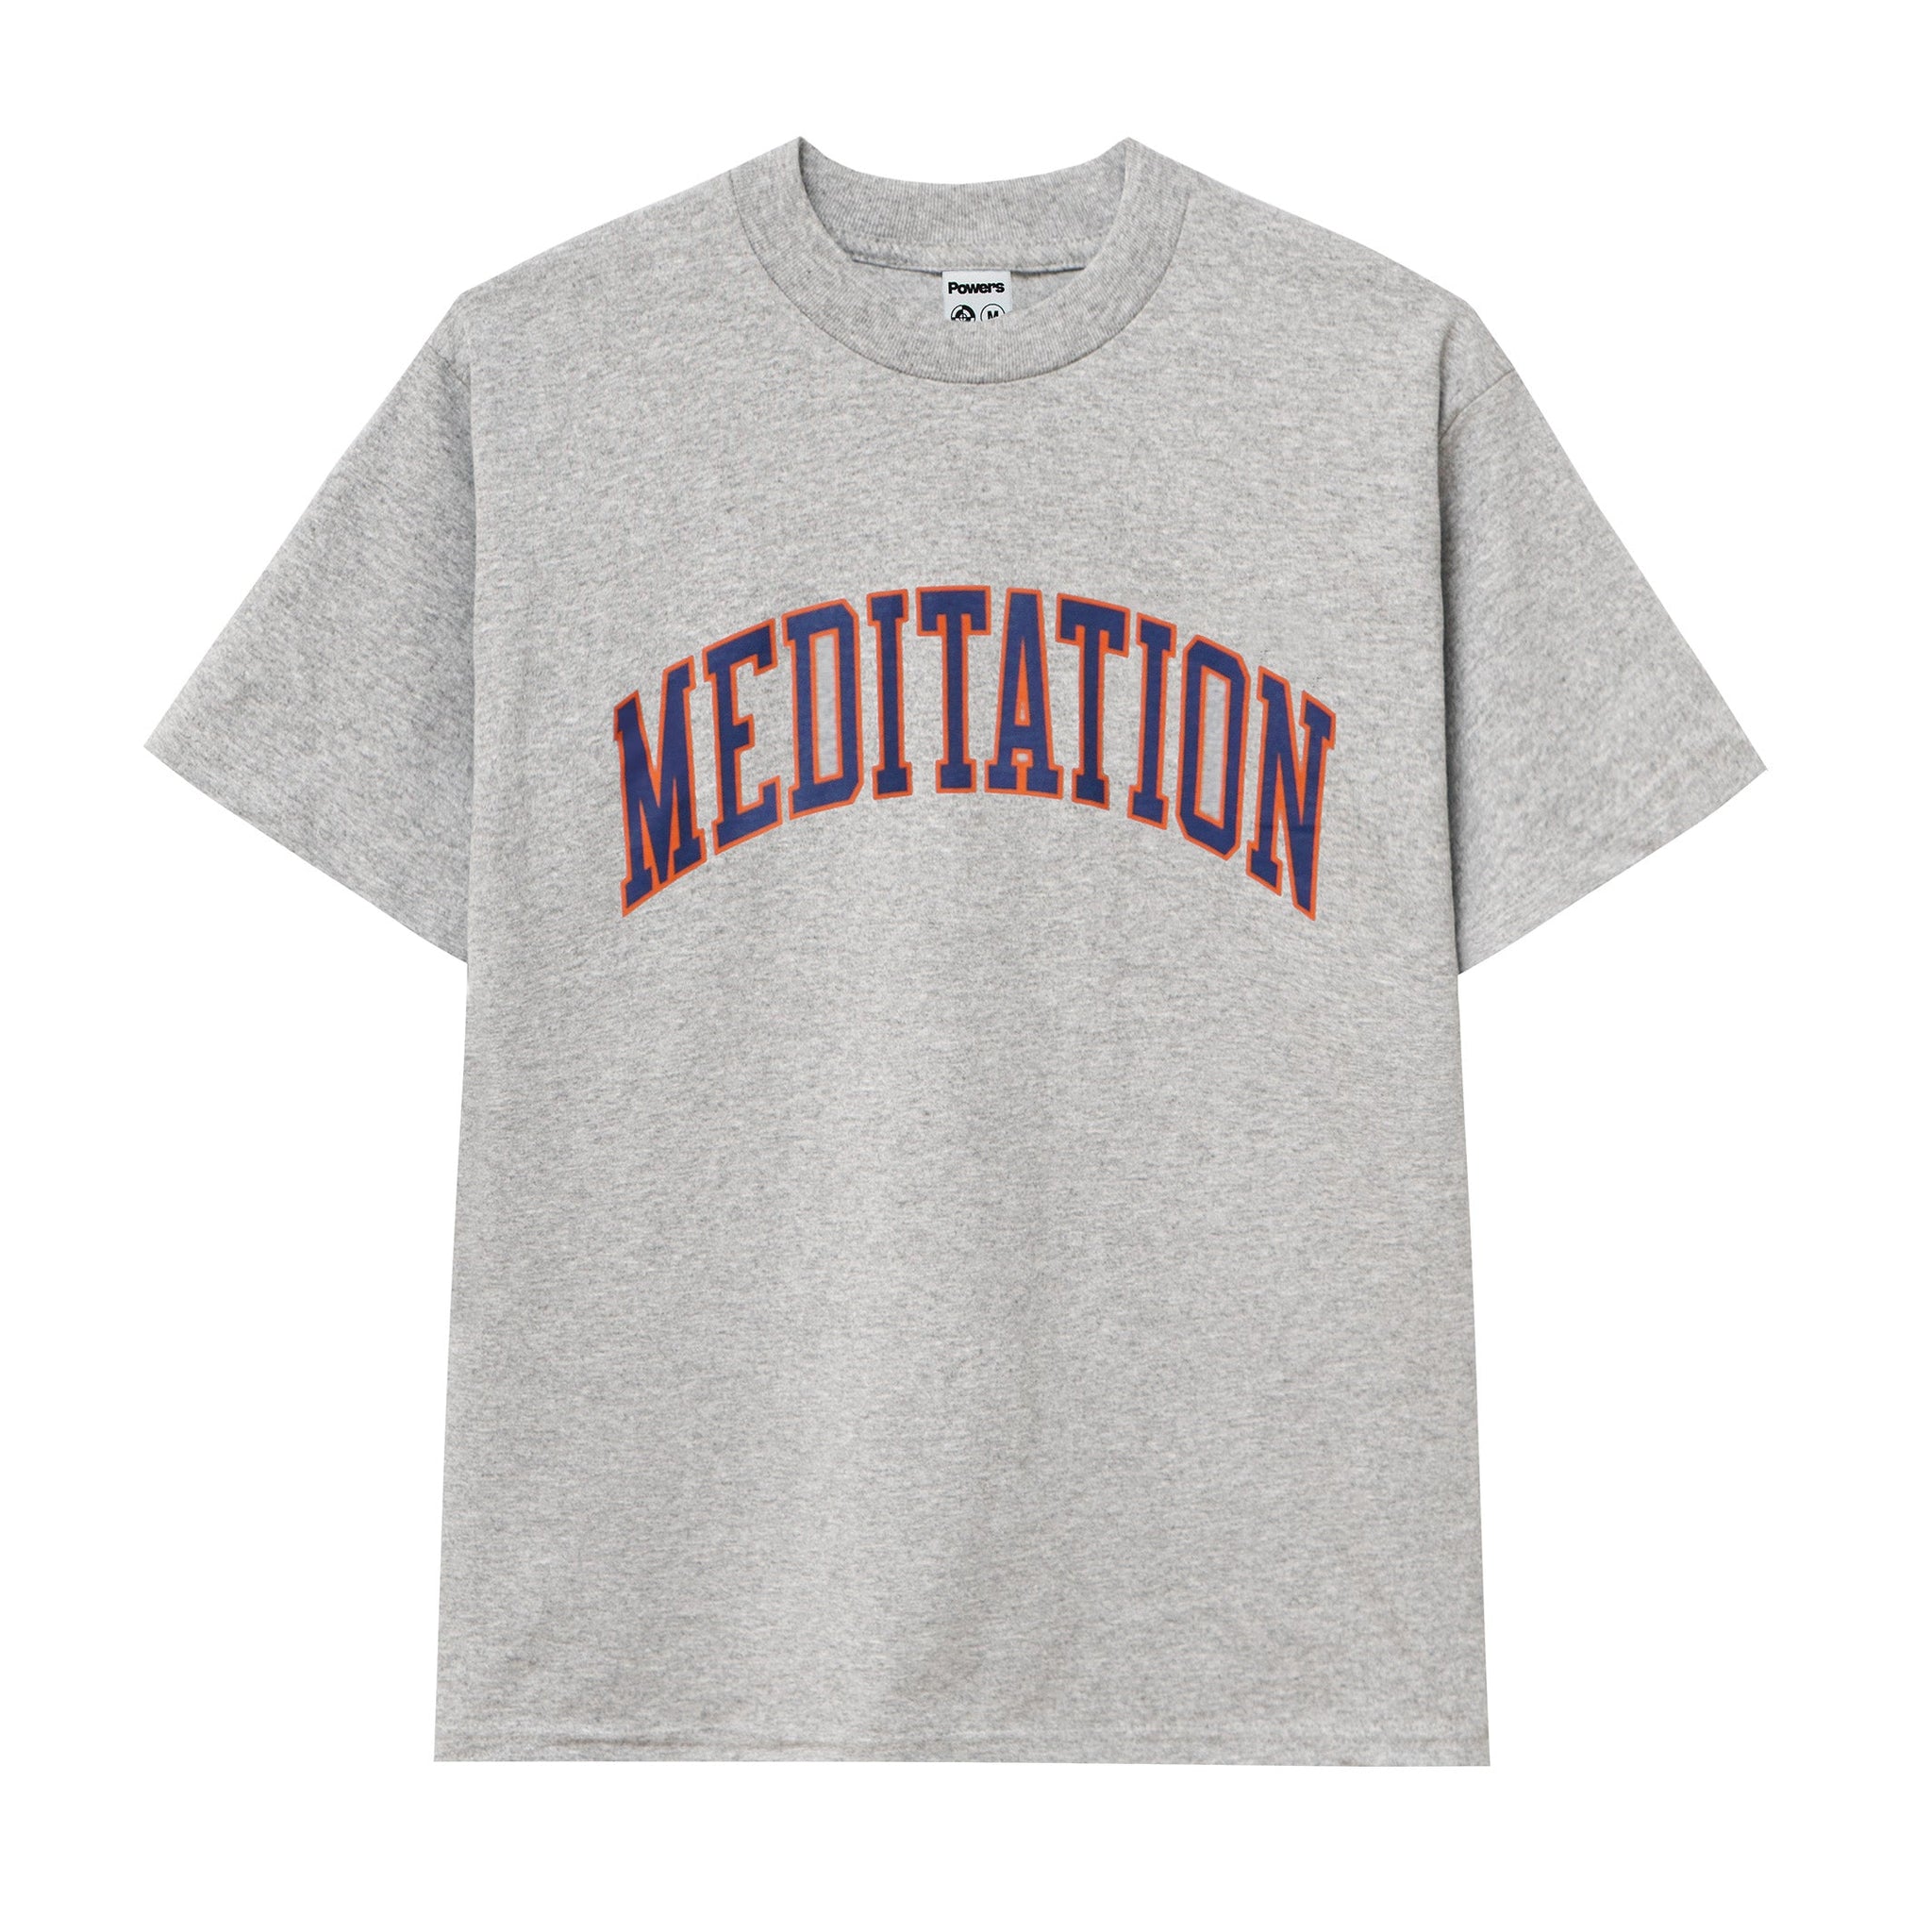 Meditation S/S Tee - Heather Grey